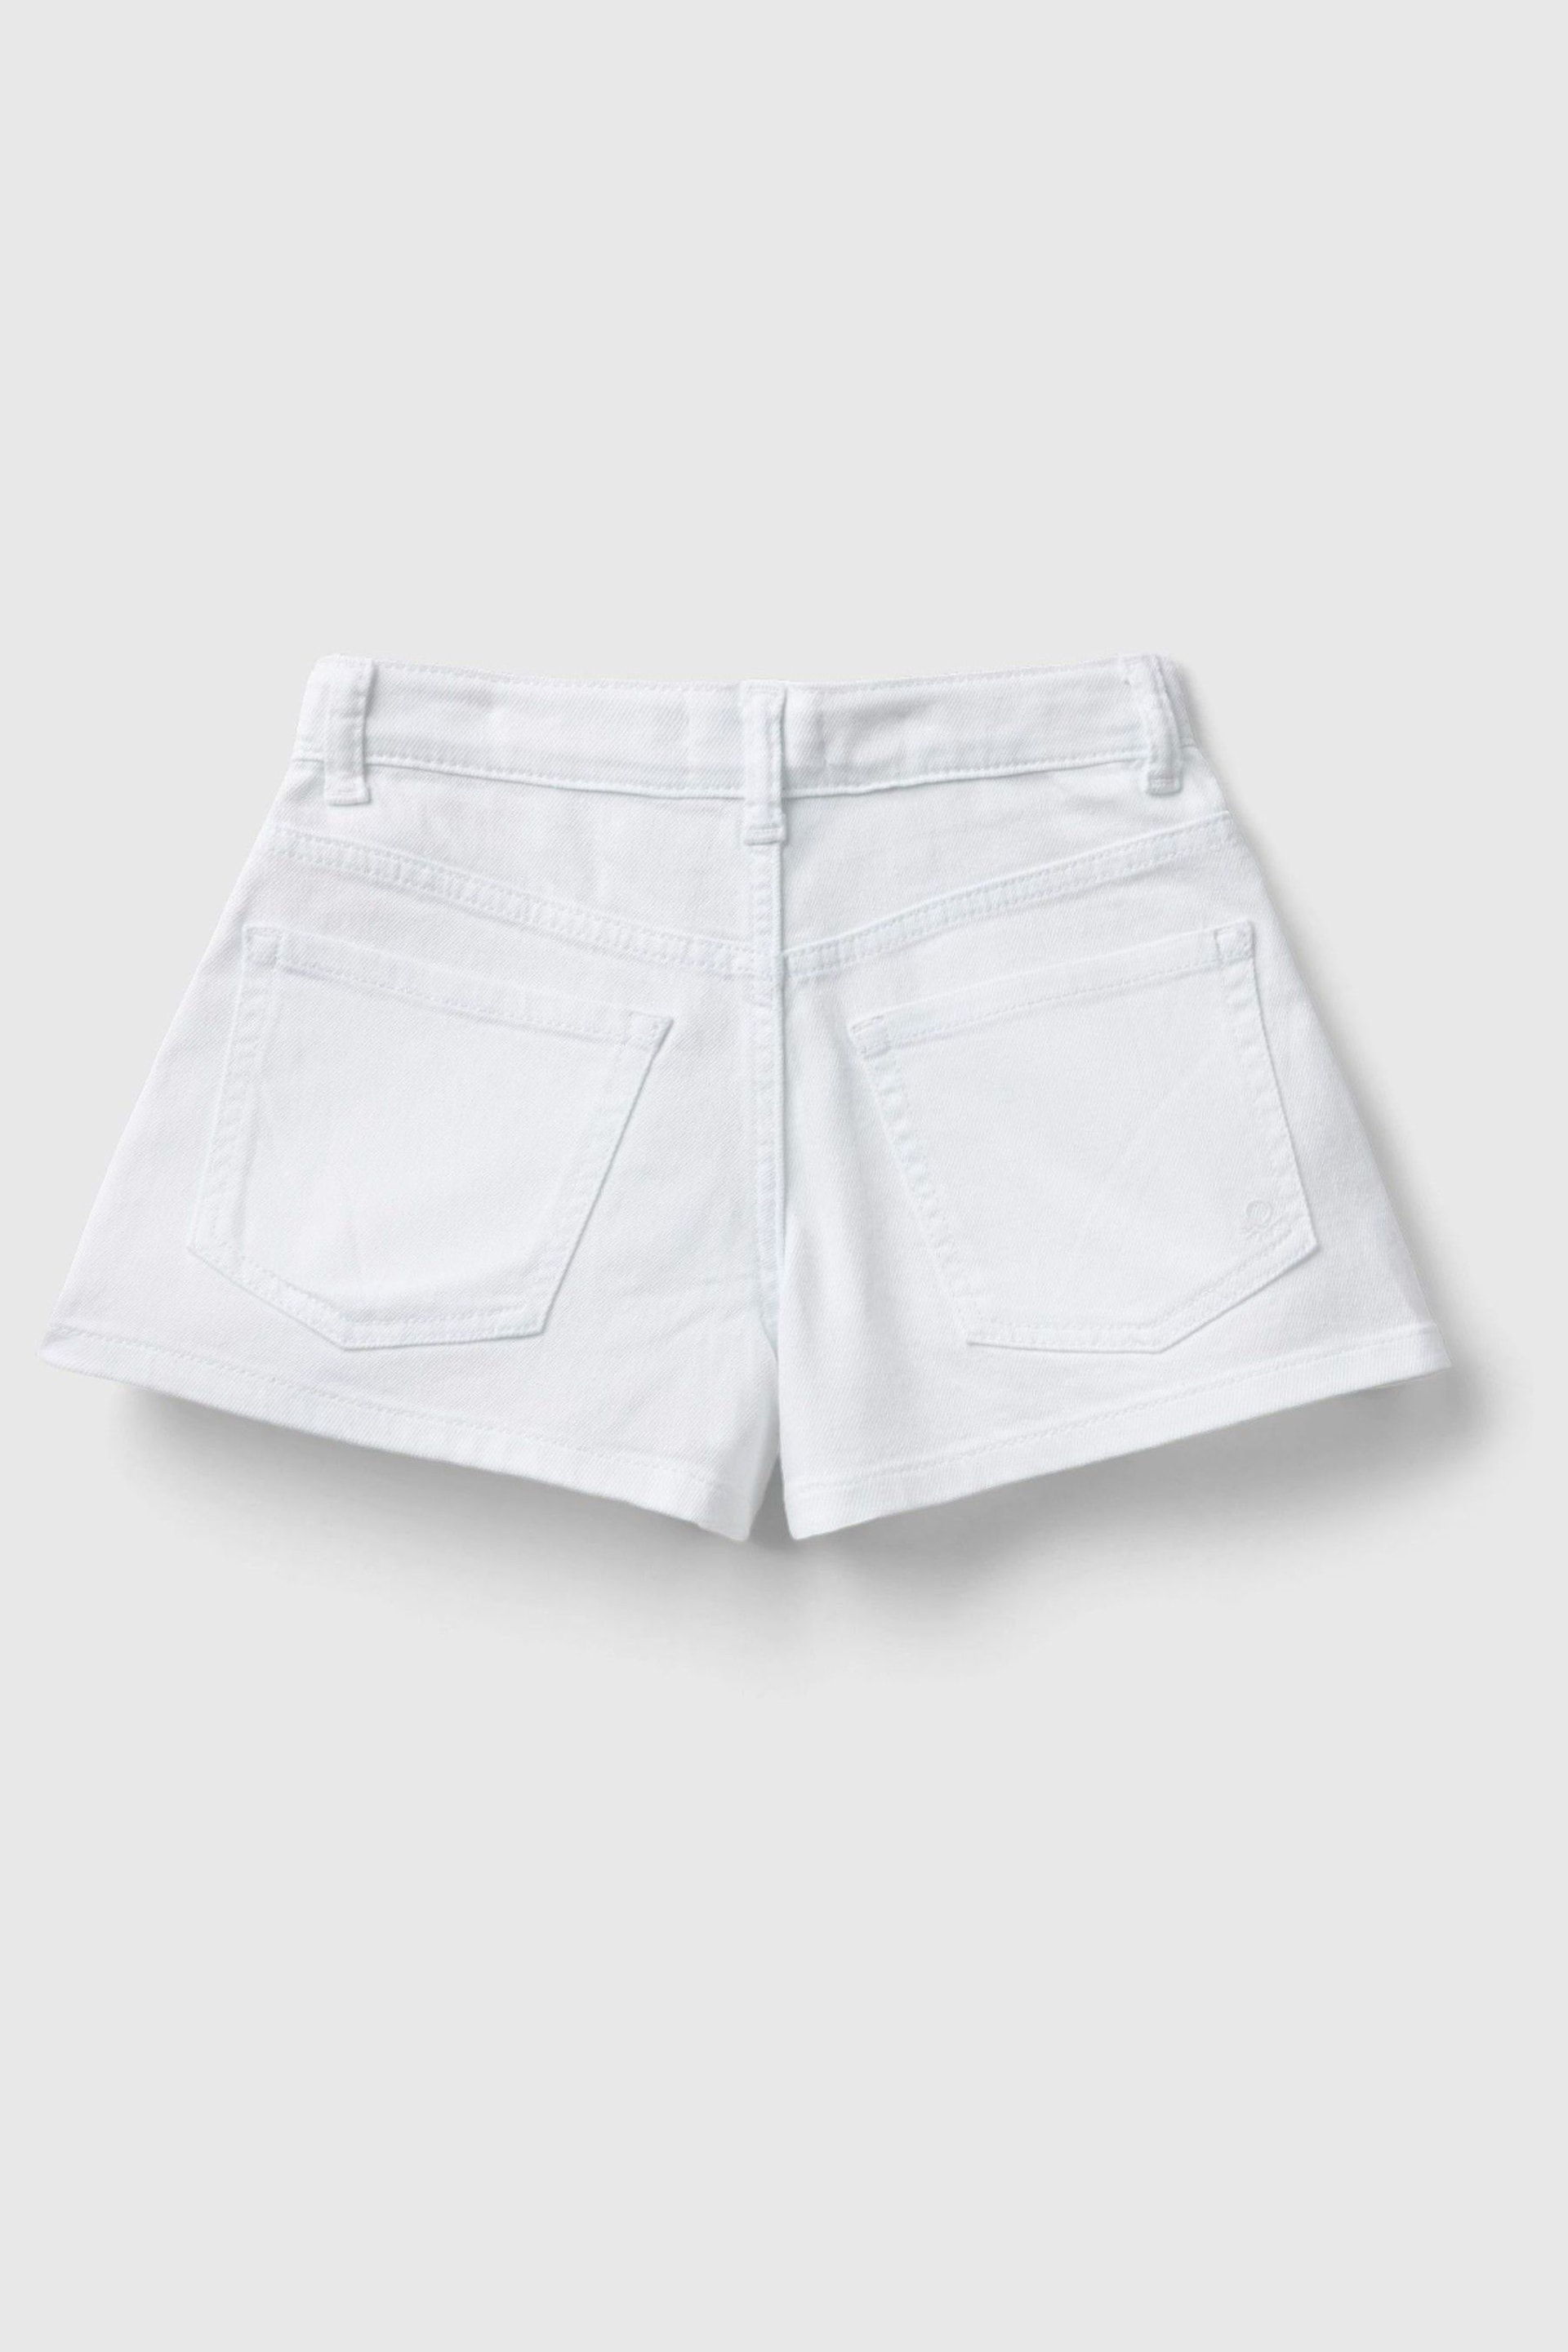 Benetton Girls Cream Shorts - Image 2 of 3